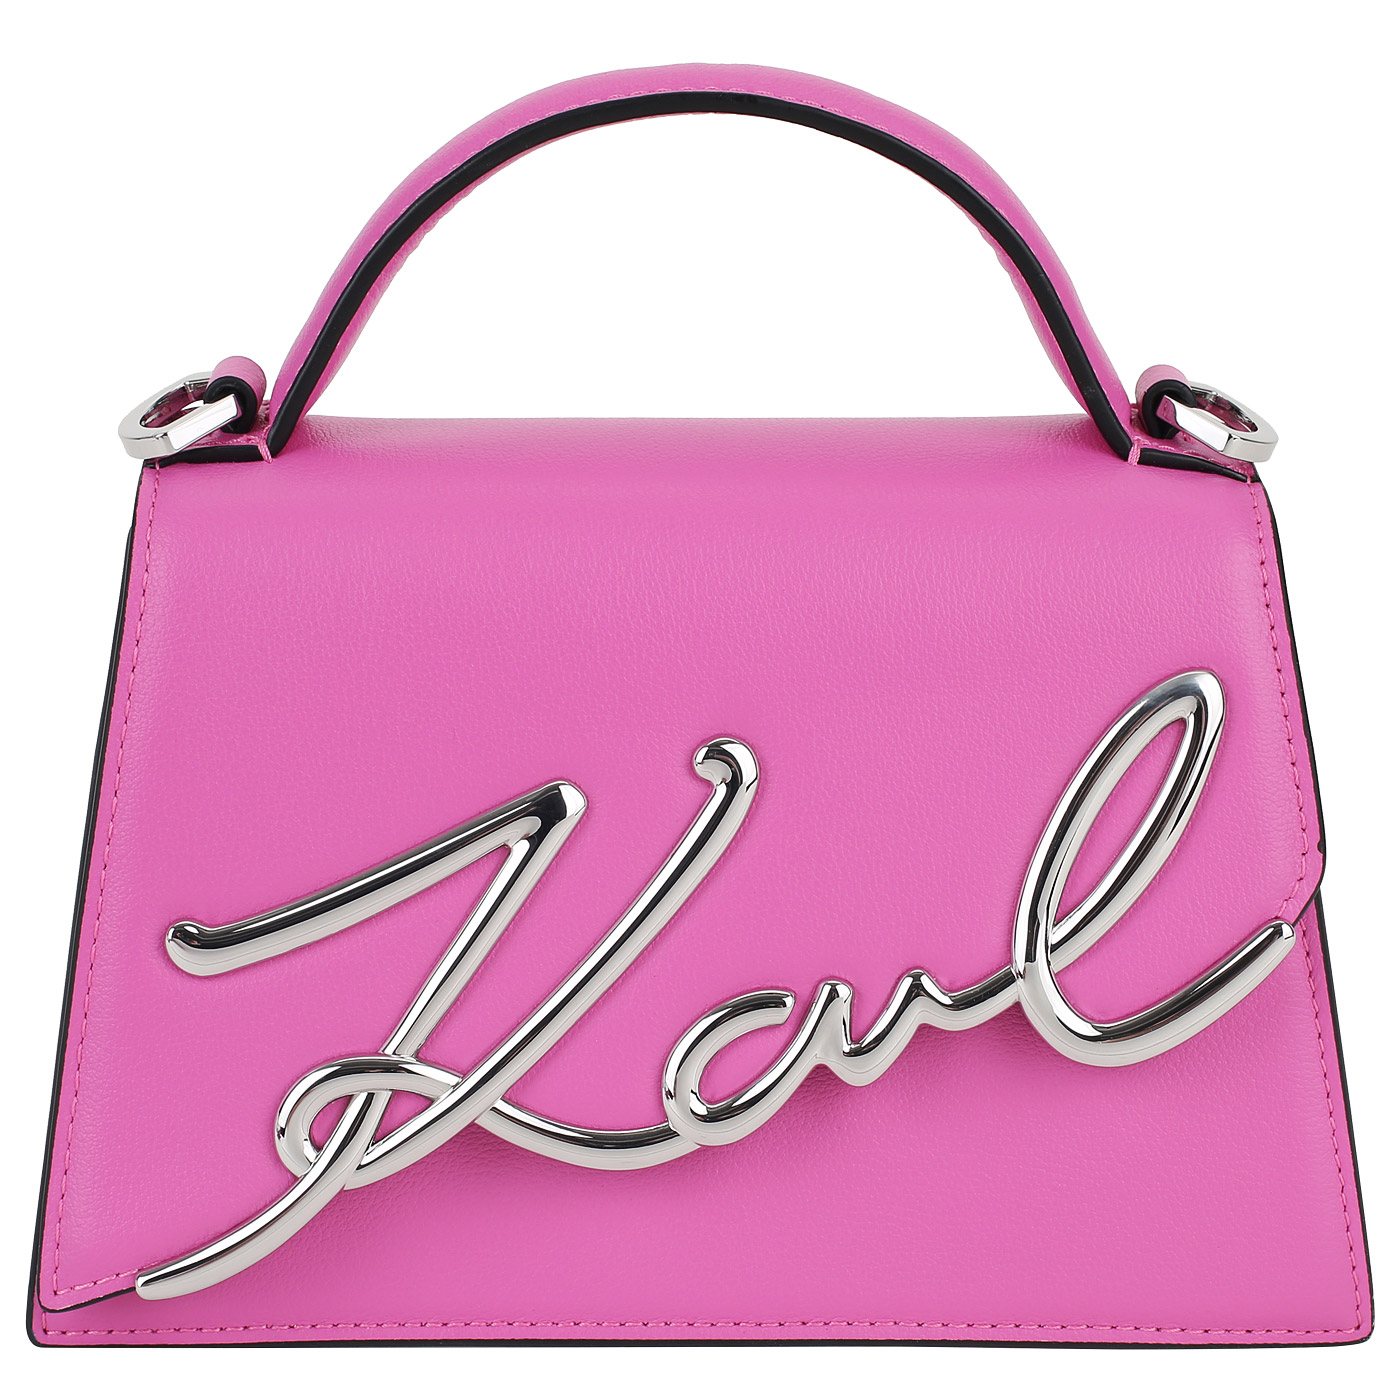 Karl Lagerfeld Кожаная сумка